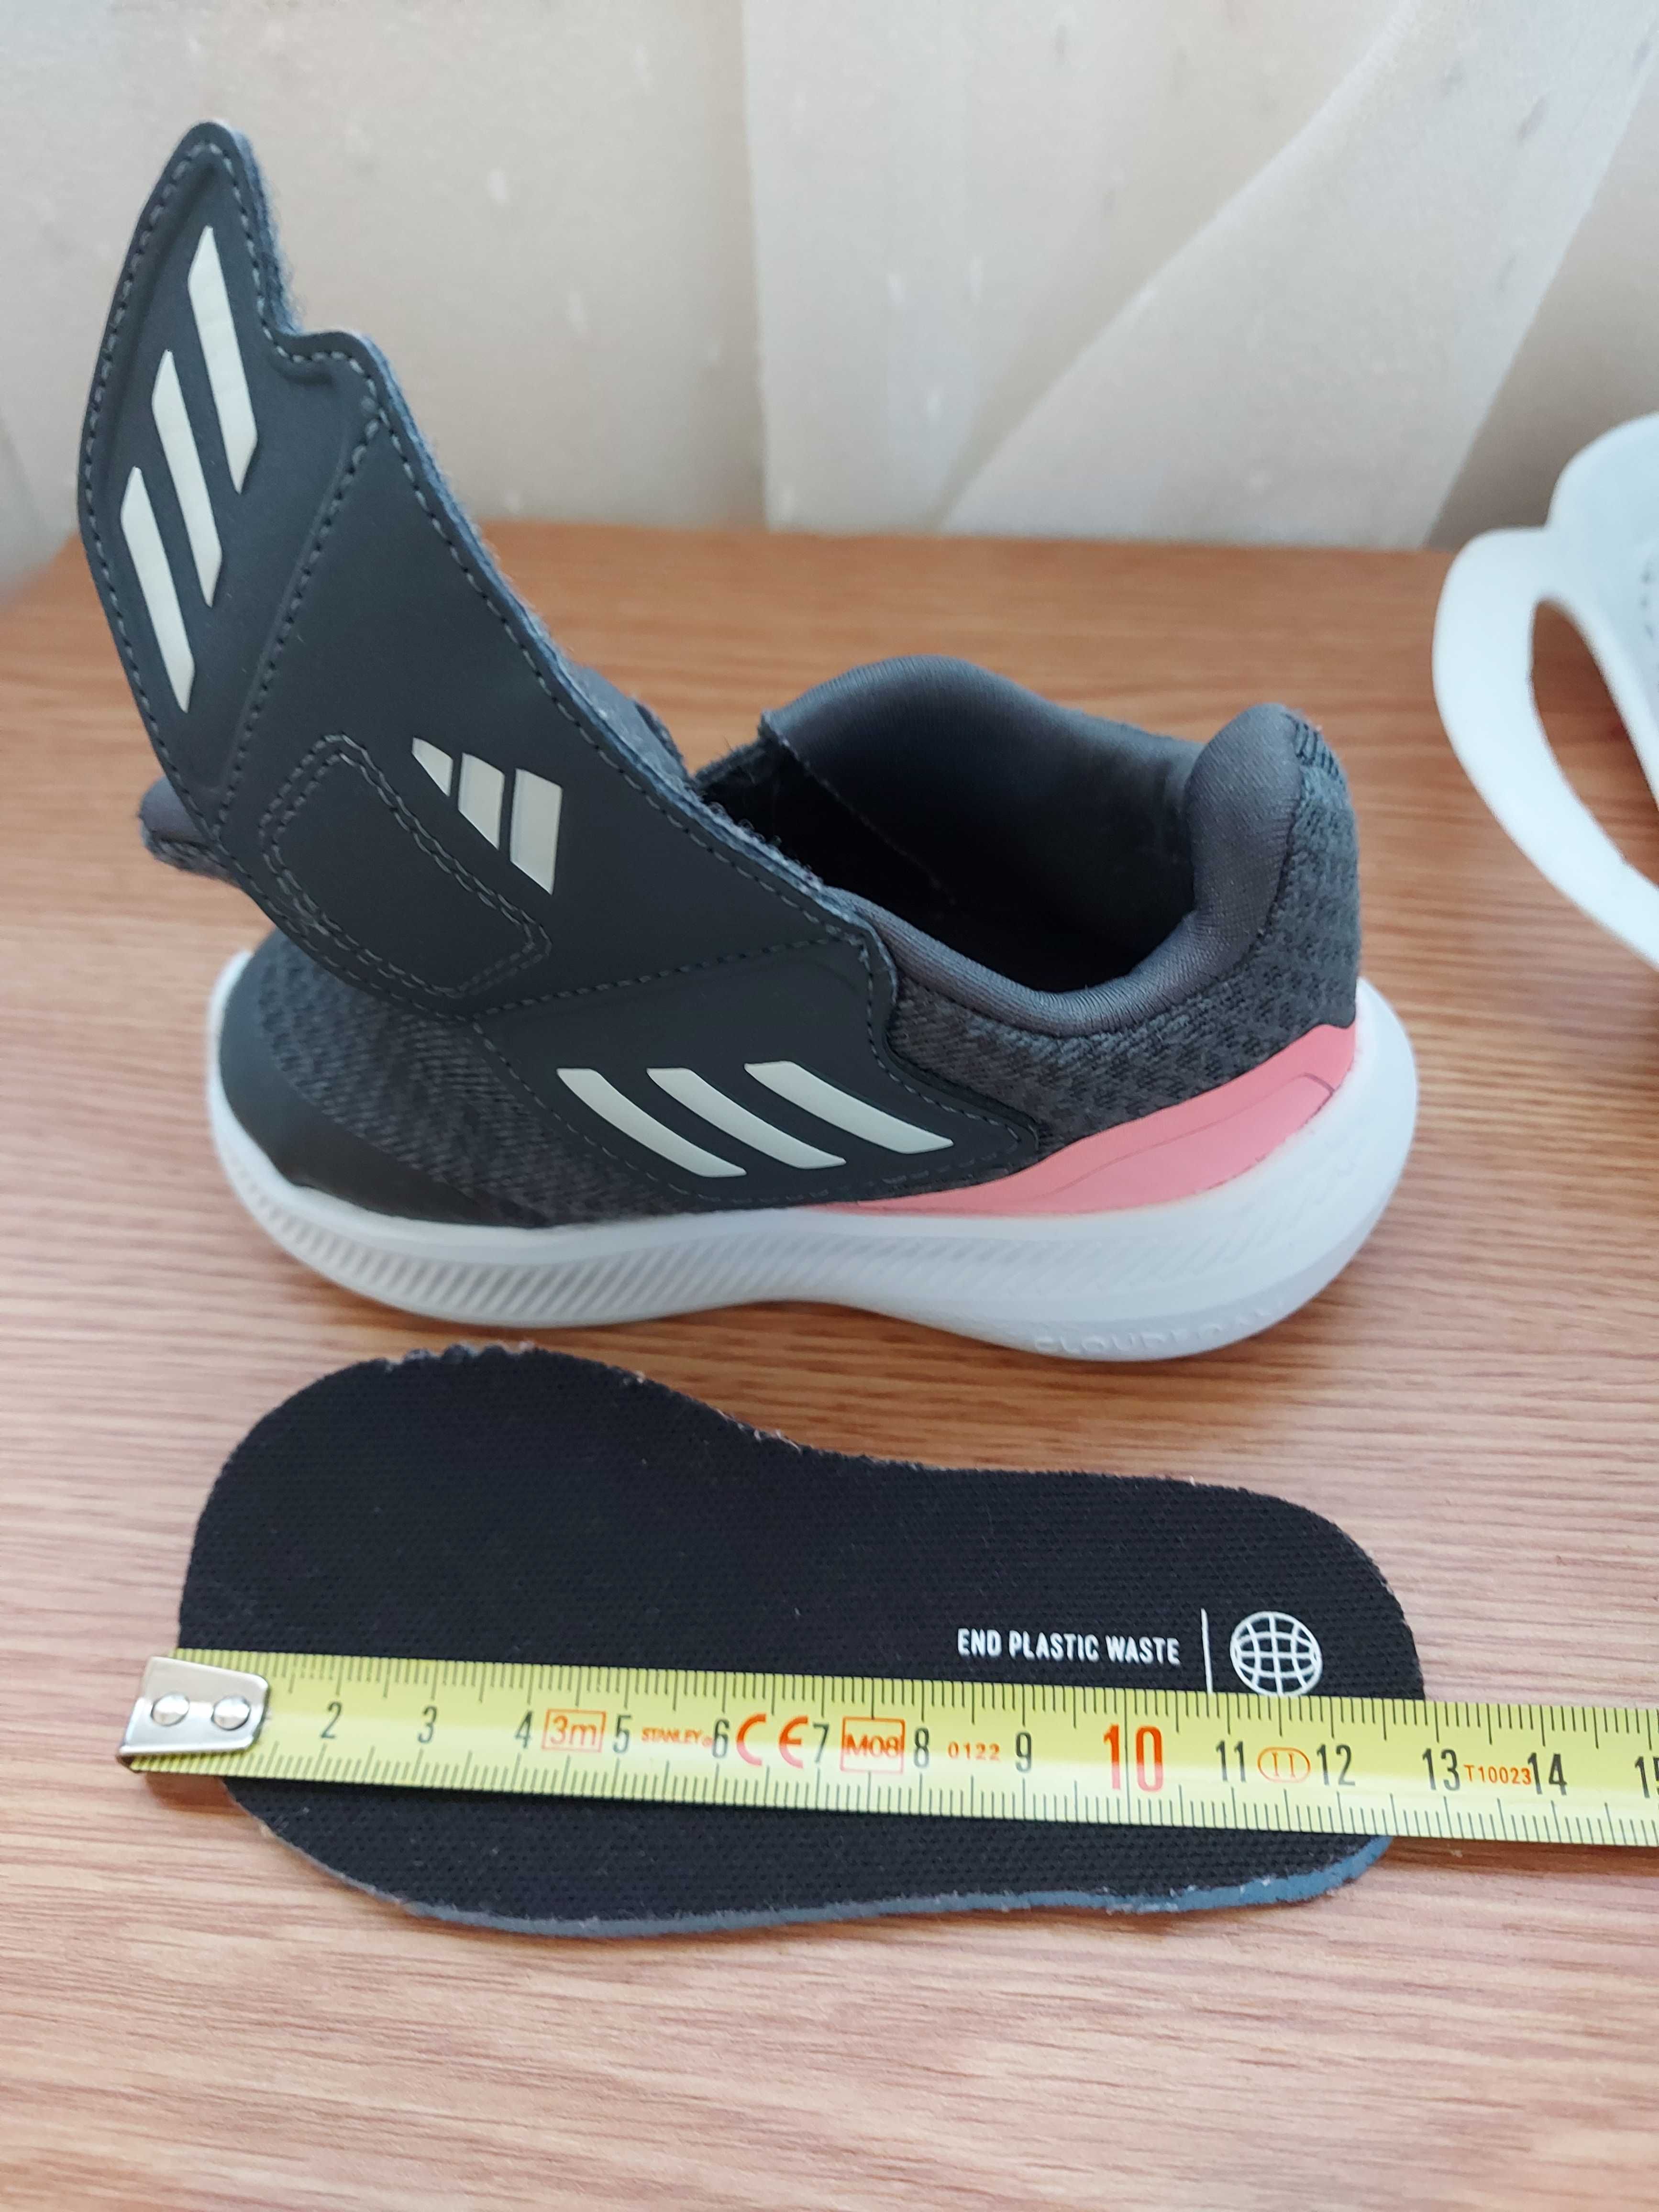 Детски Обувки Adidas Runfalcon 3.0 като нови